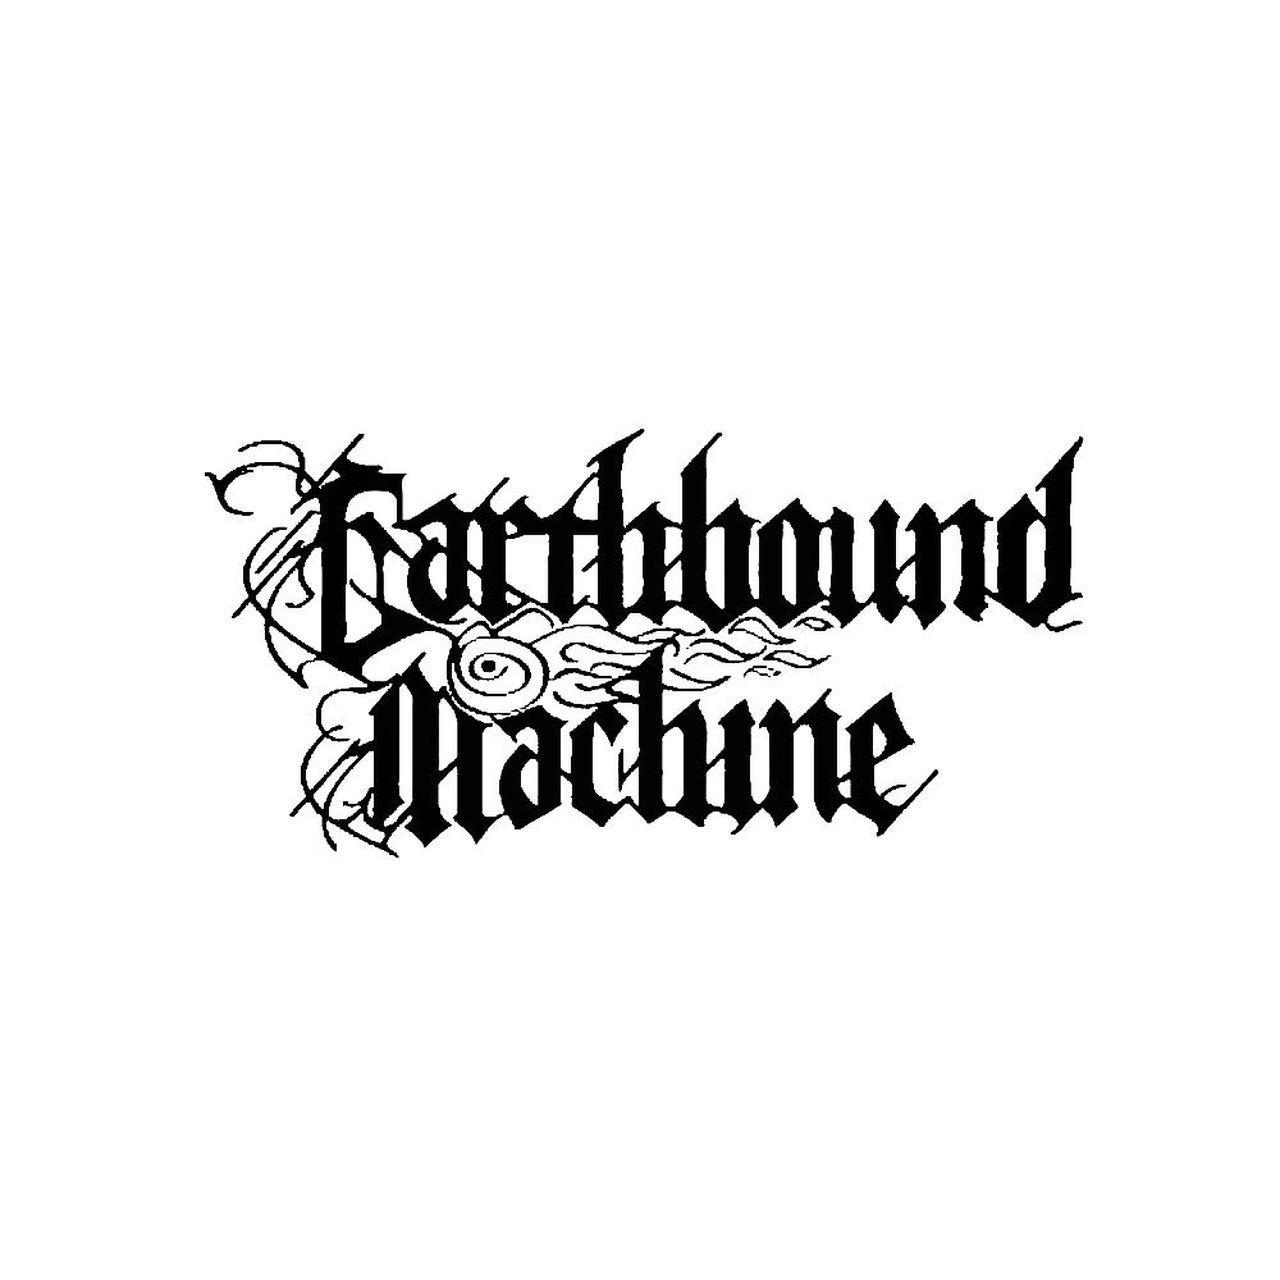 Earthbound Logo - Earthbound Machine Band Logo Vinyl Decal